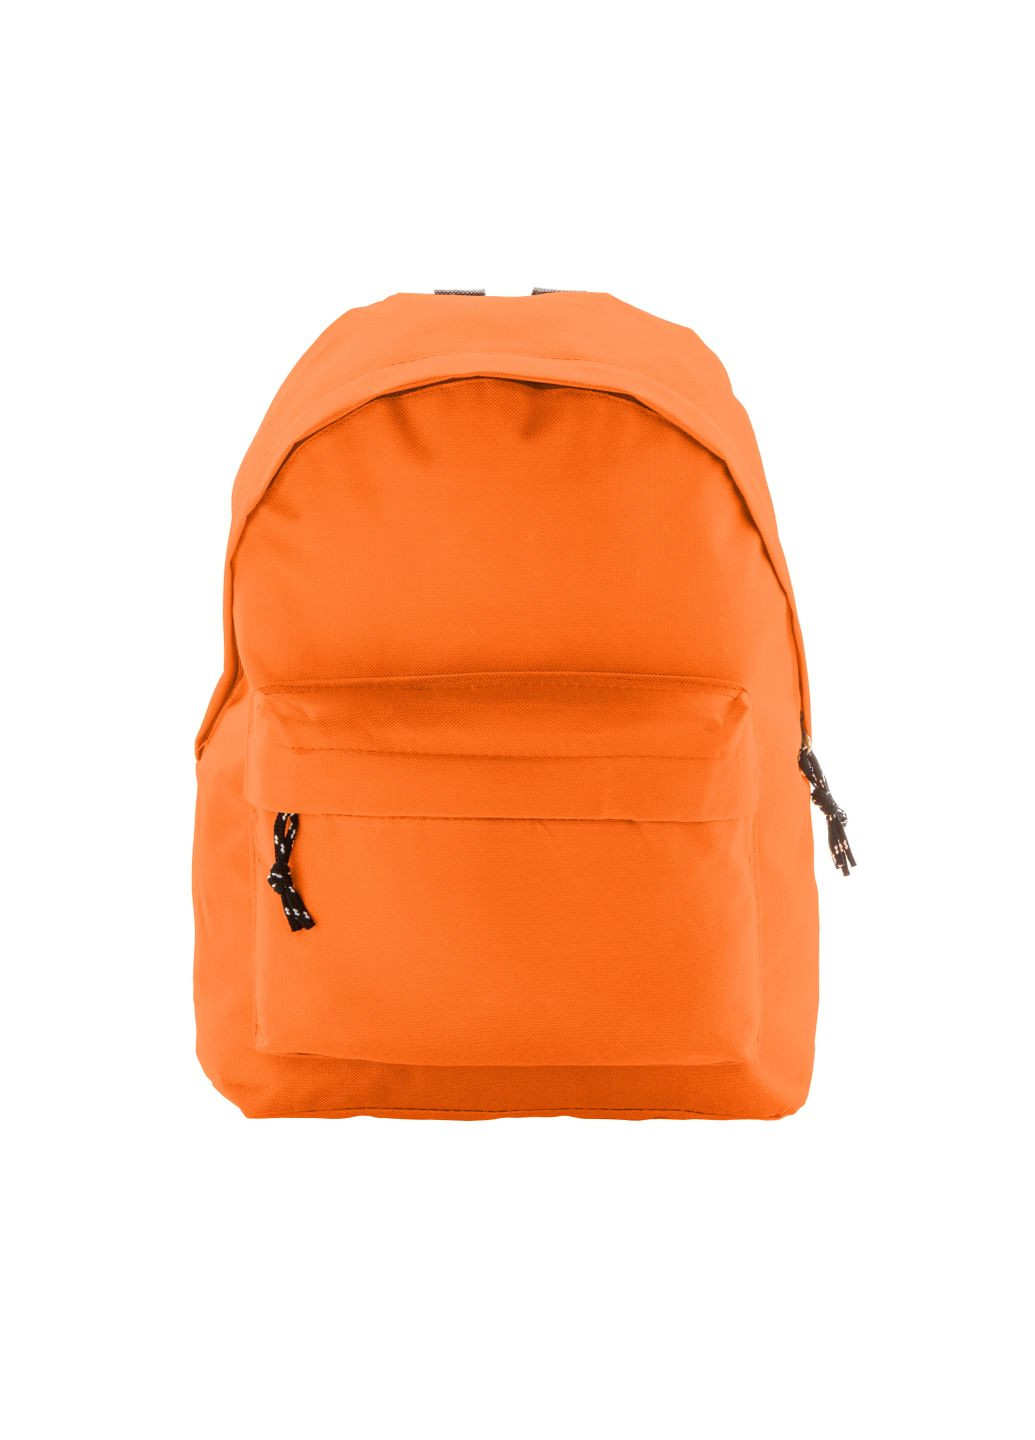 Рюкзак оранжевый 3009-03 Discover compact (292314848)